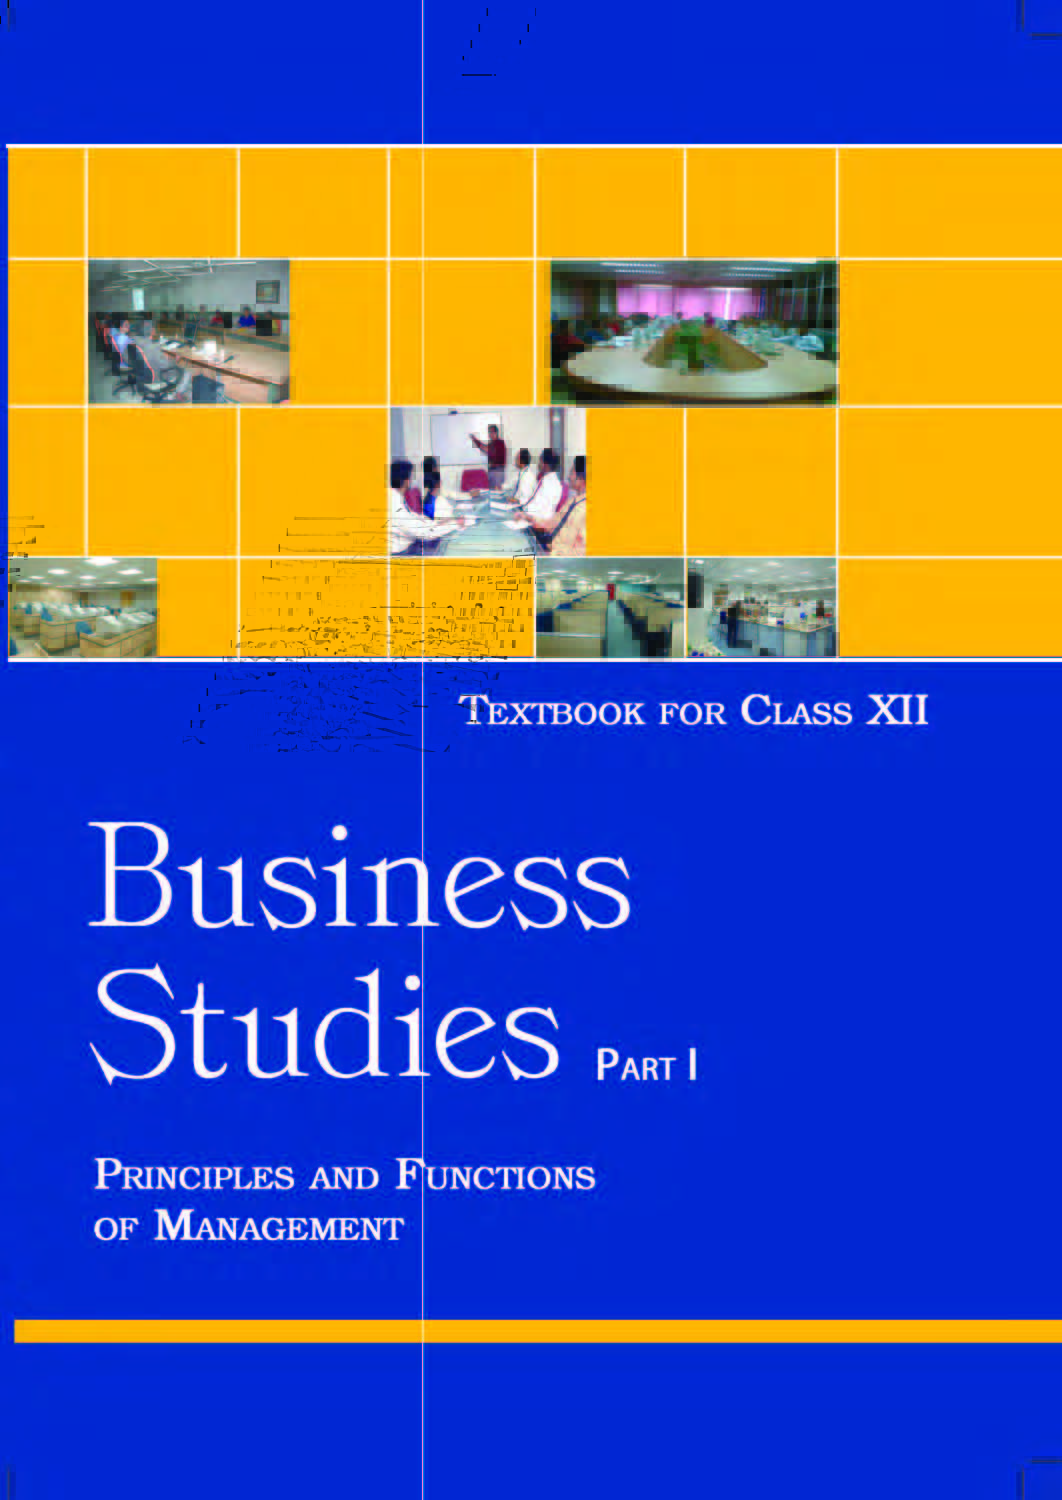 case study of business studies class 12